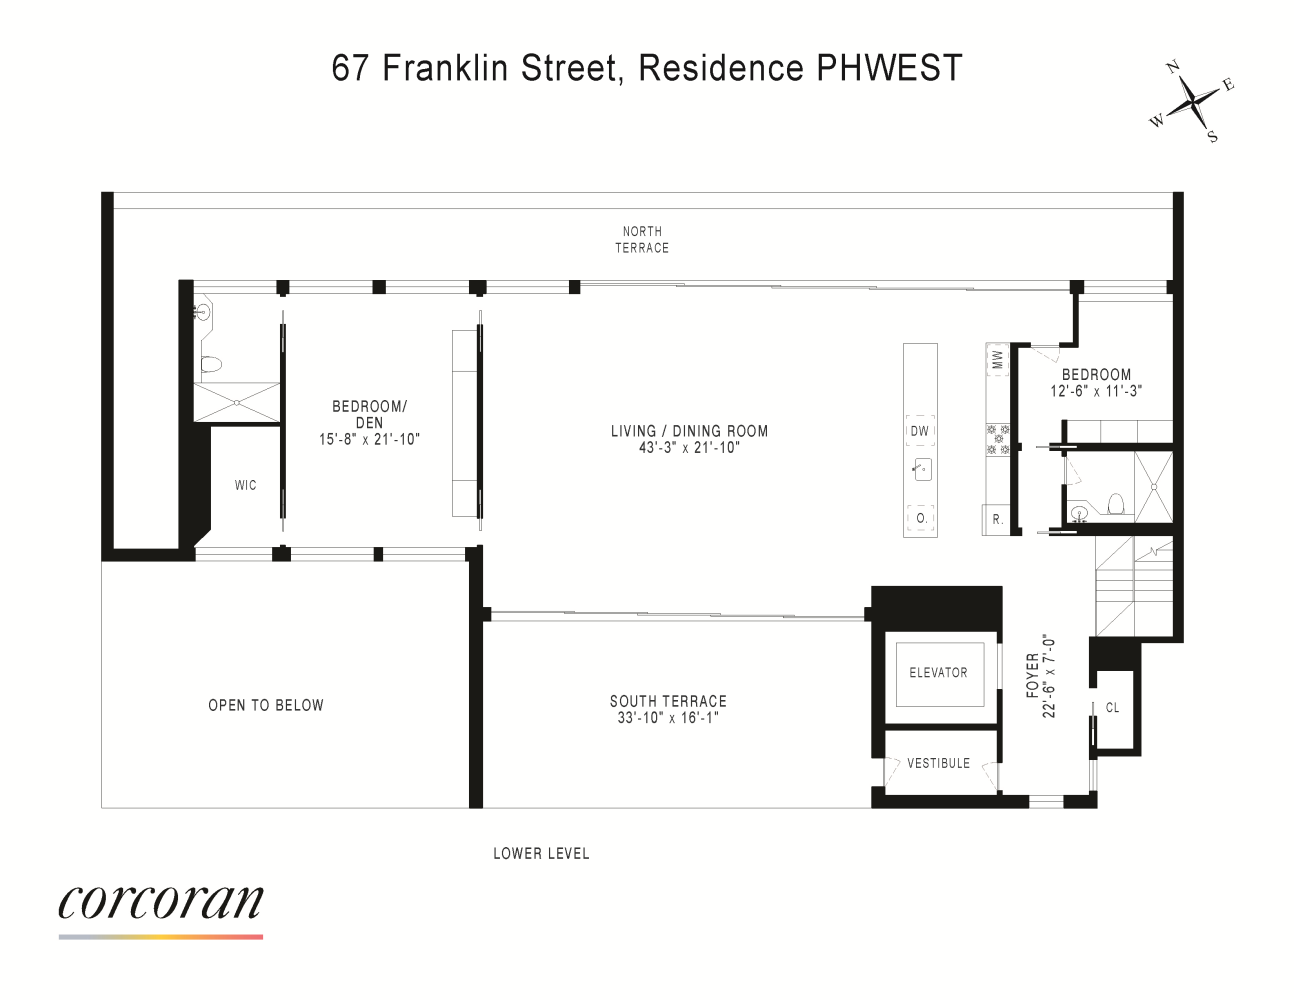 Floorplan for 67 Franklin Street, PHWEST